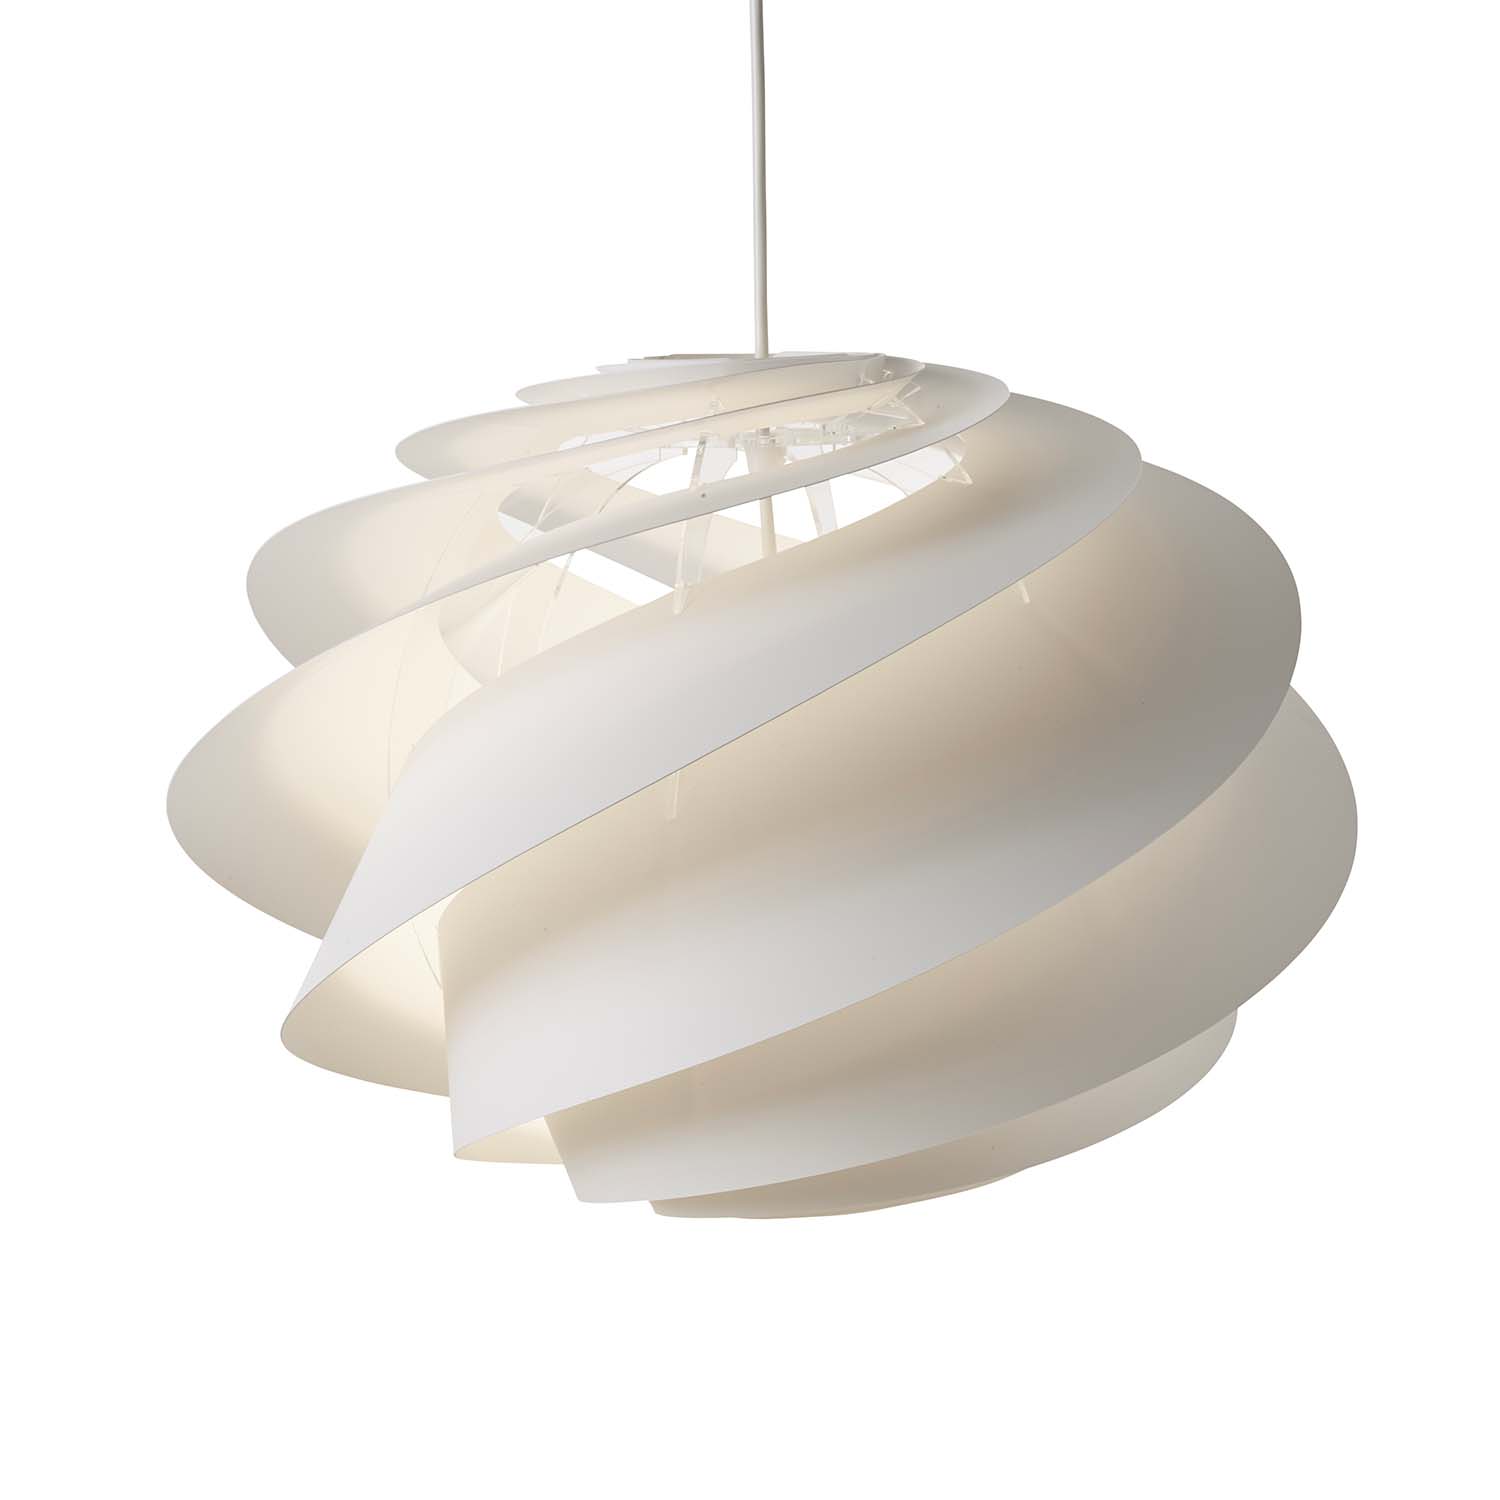 SWIRL 1 - White or copper spiral suspension, designer creation